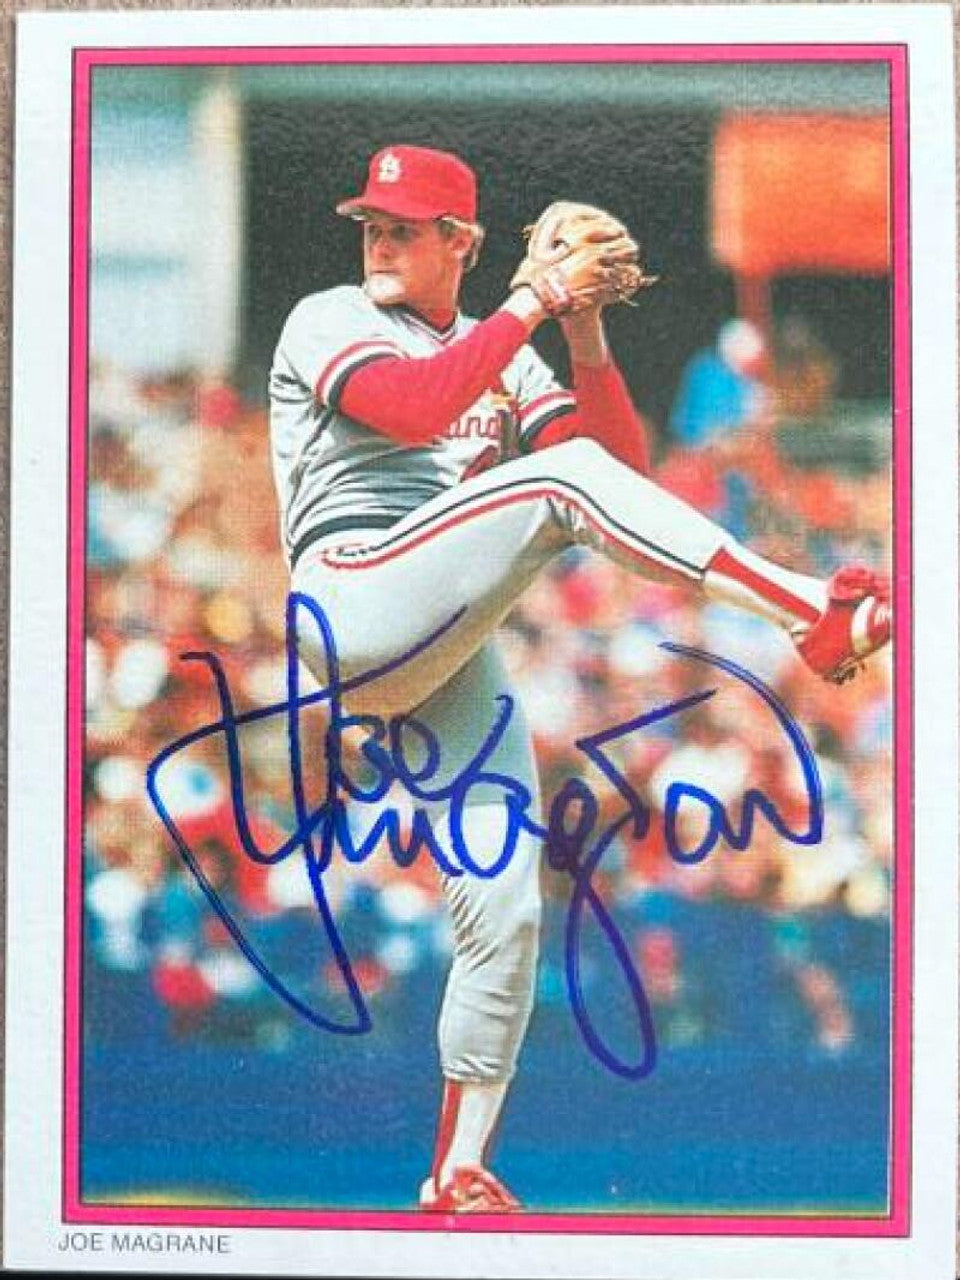 Joe Magrane Signed 1988 Topps All-Star Glossy Baseball Card - St Louis Cardinals